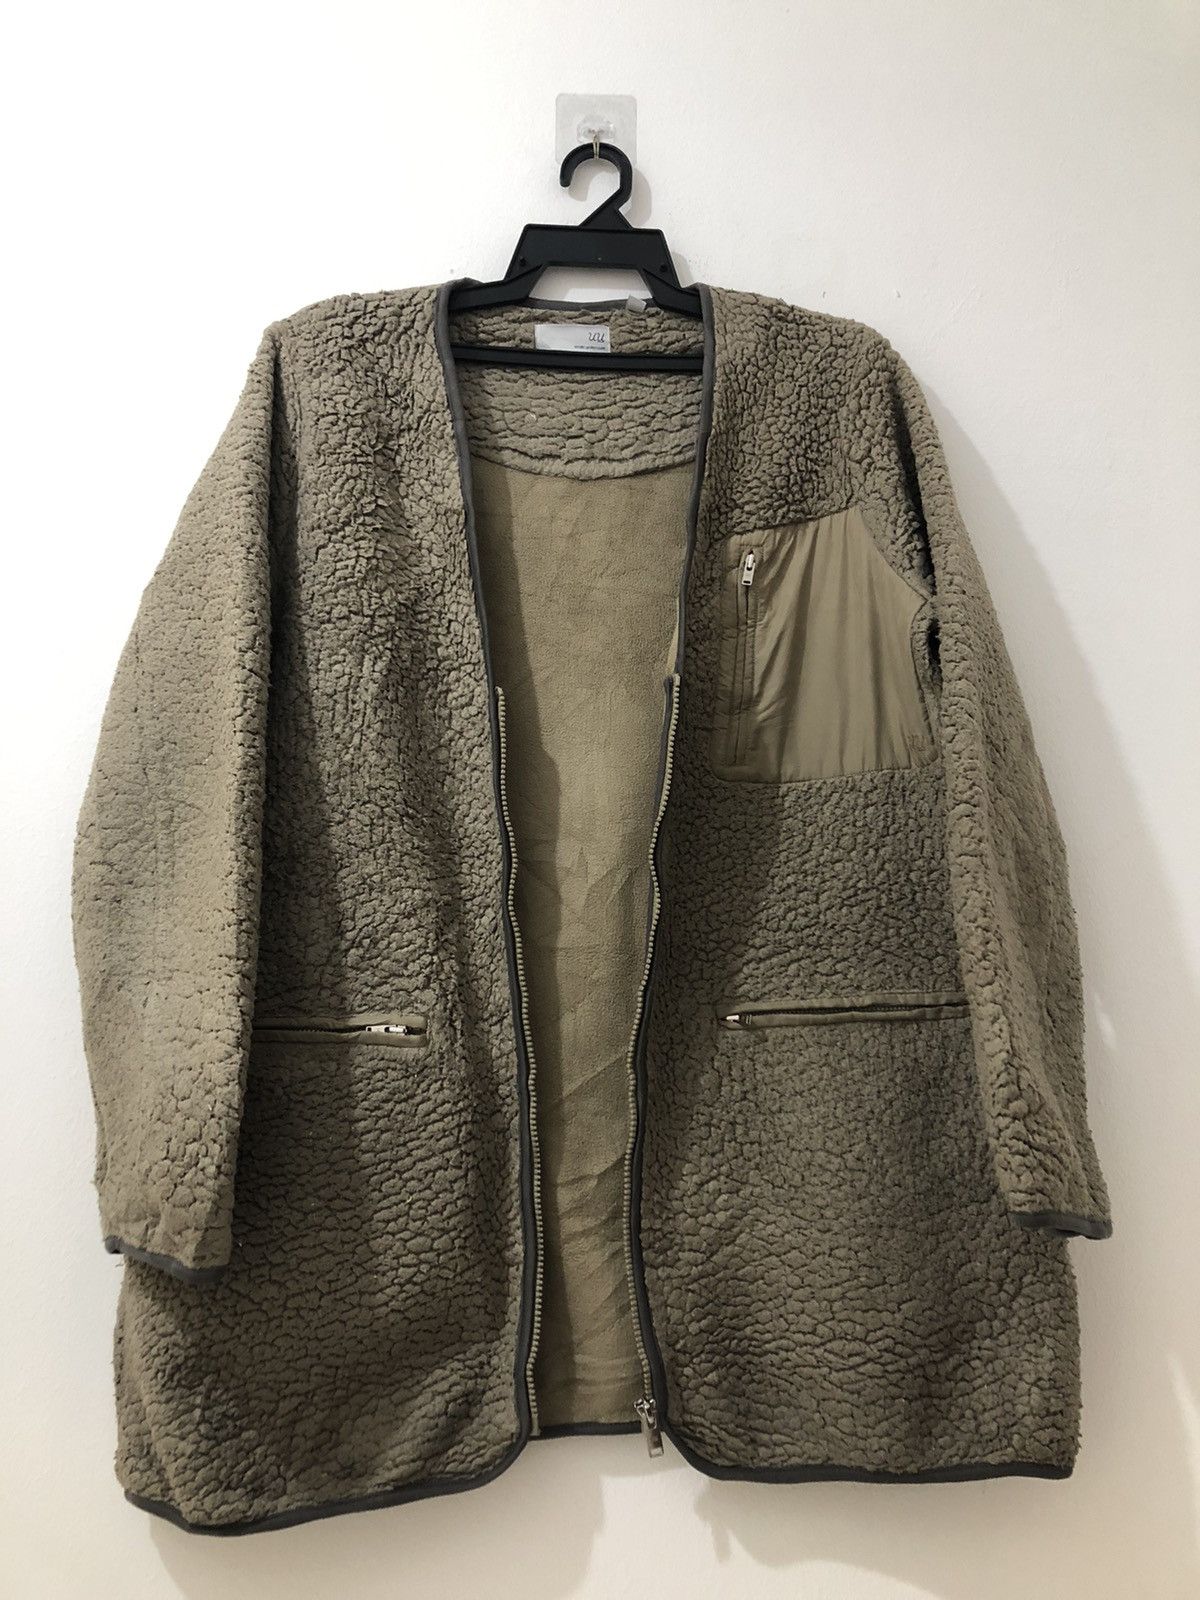 Undercover x uniqlo fleece sherpa jacket cardigan style - 3